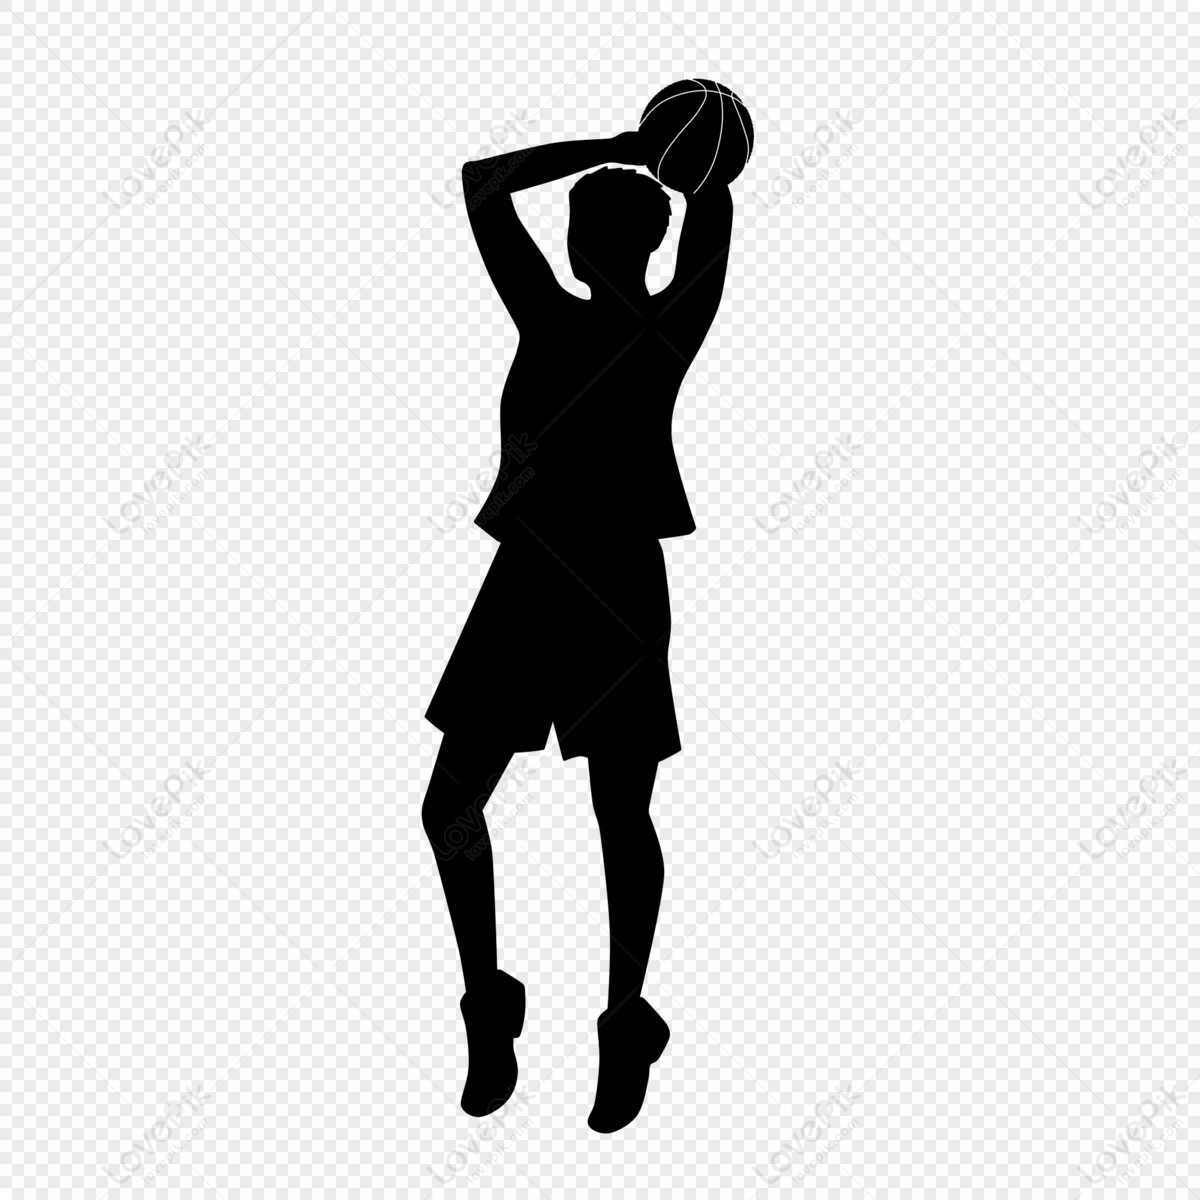 Silhouette Of Basketball Players, Basketball, Shooting, Conductor ...